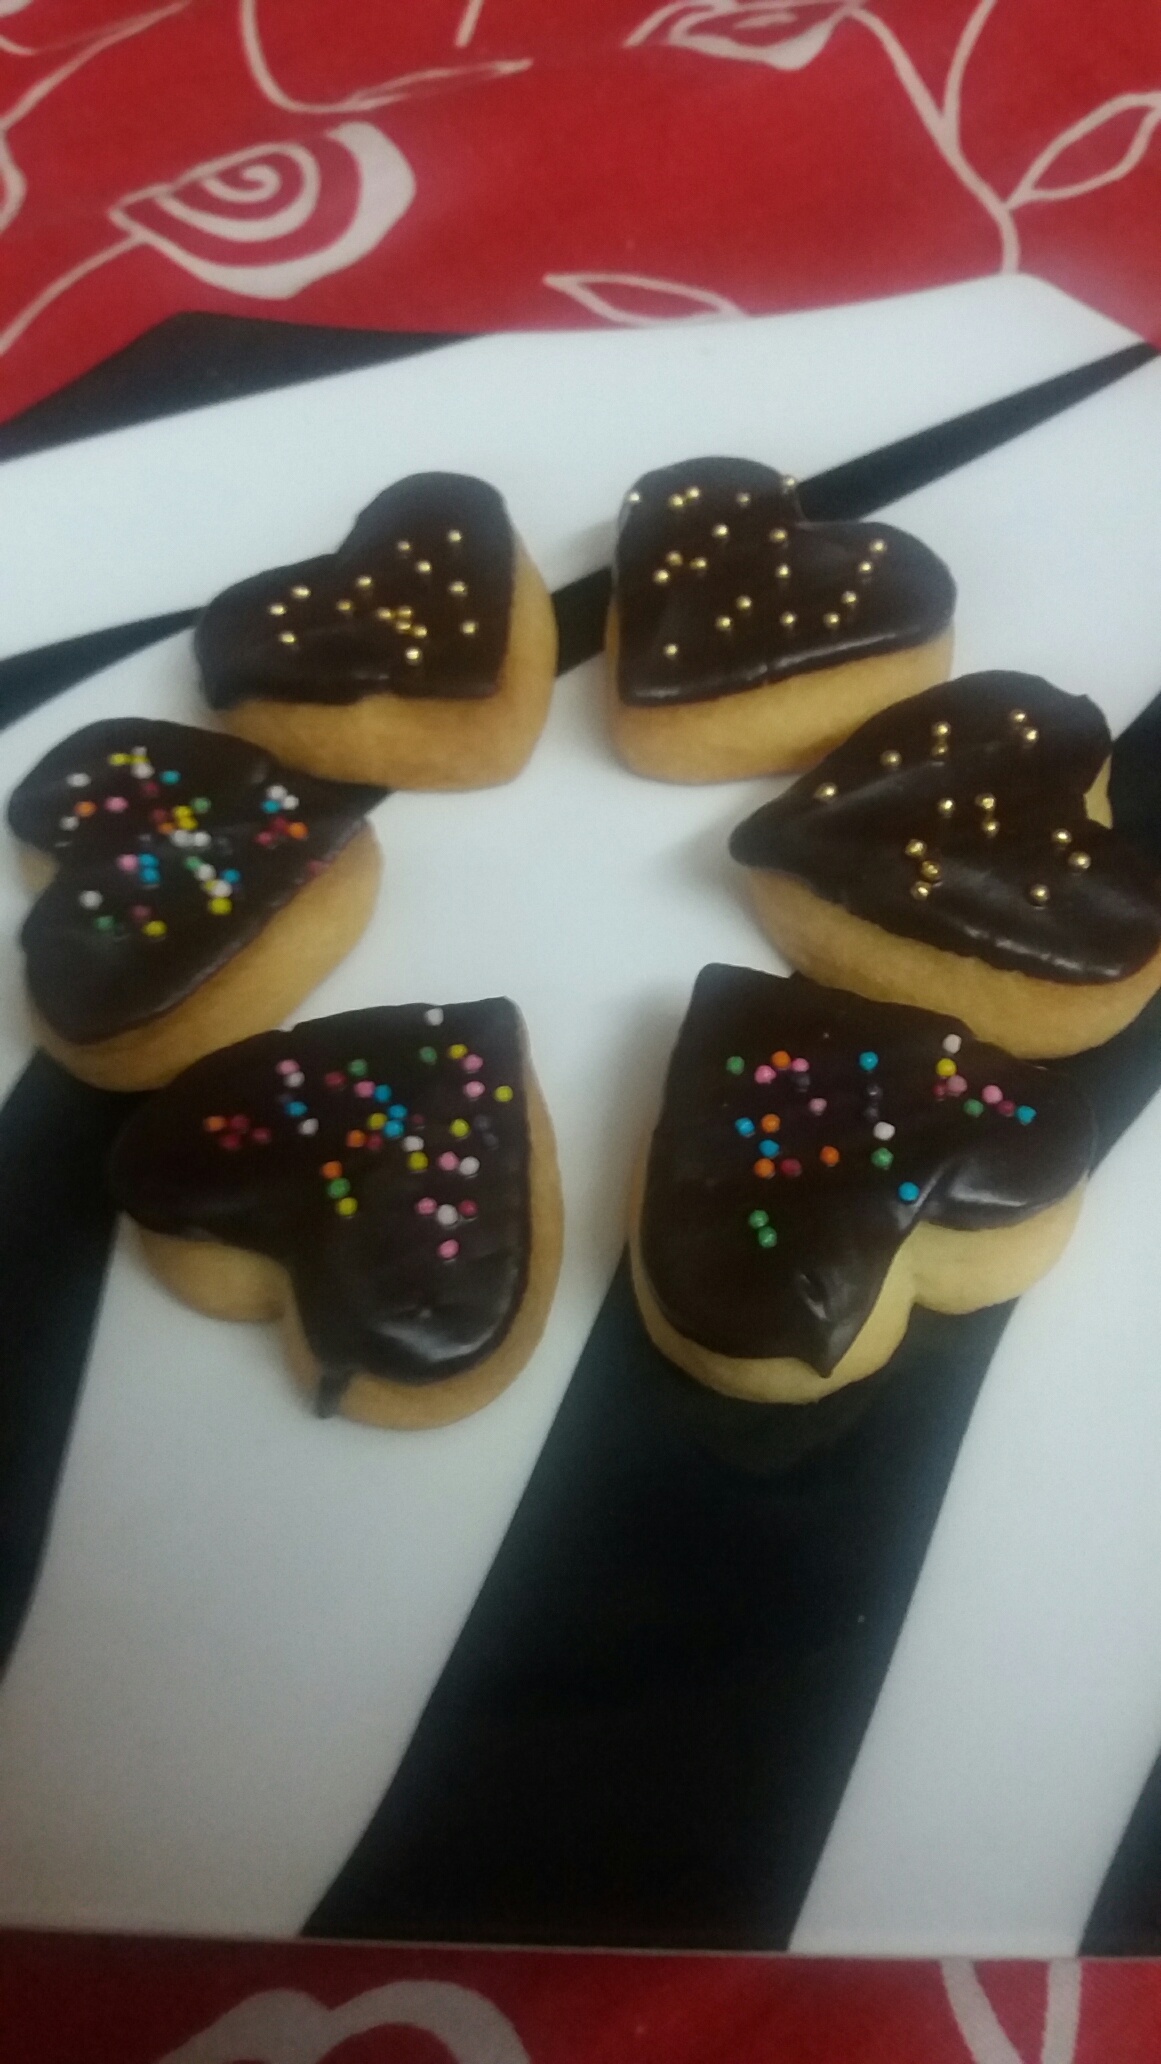 Chocolate heart cookies